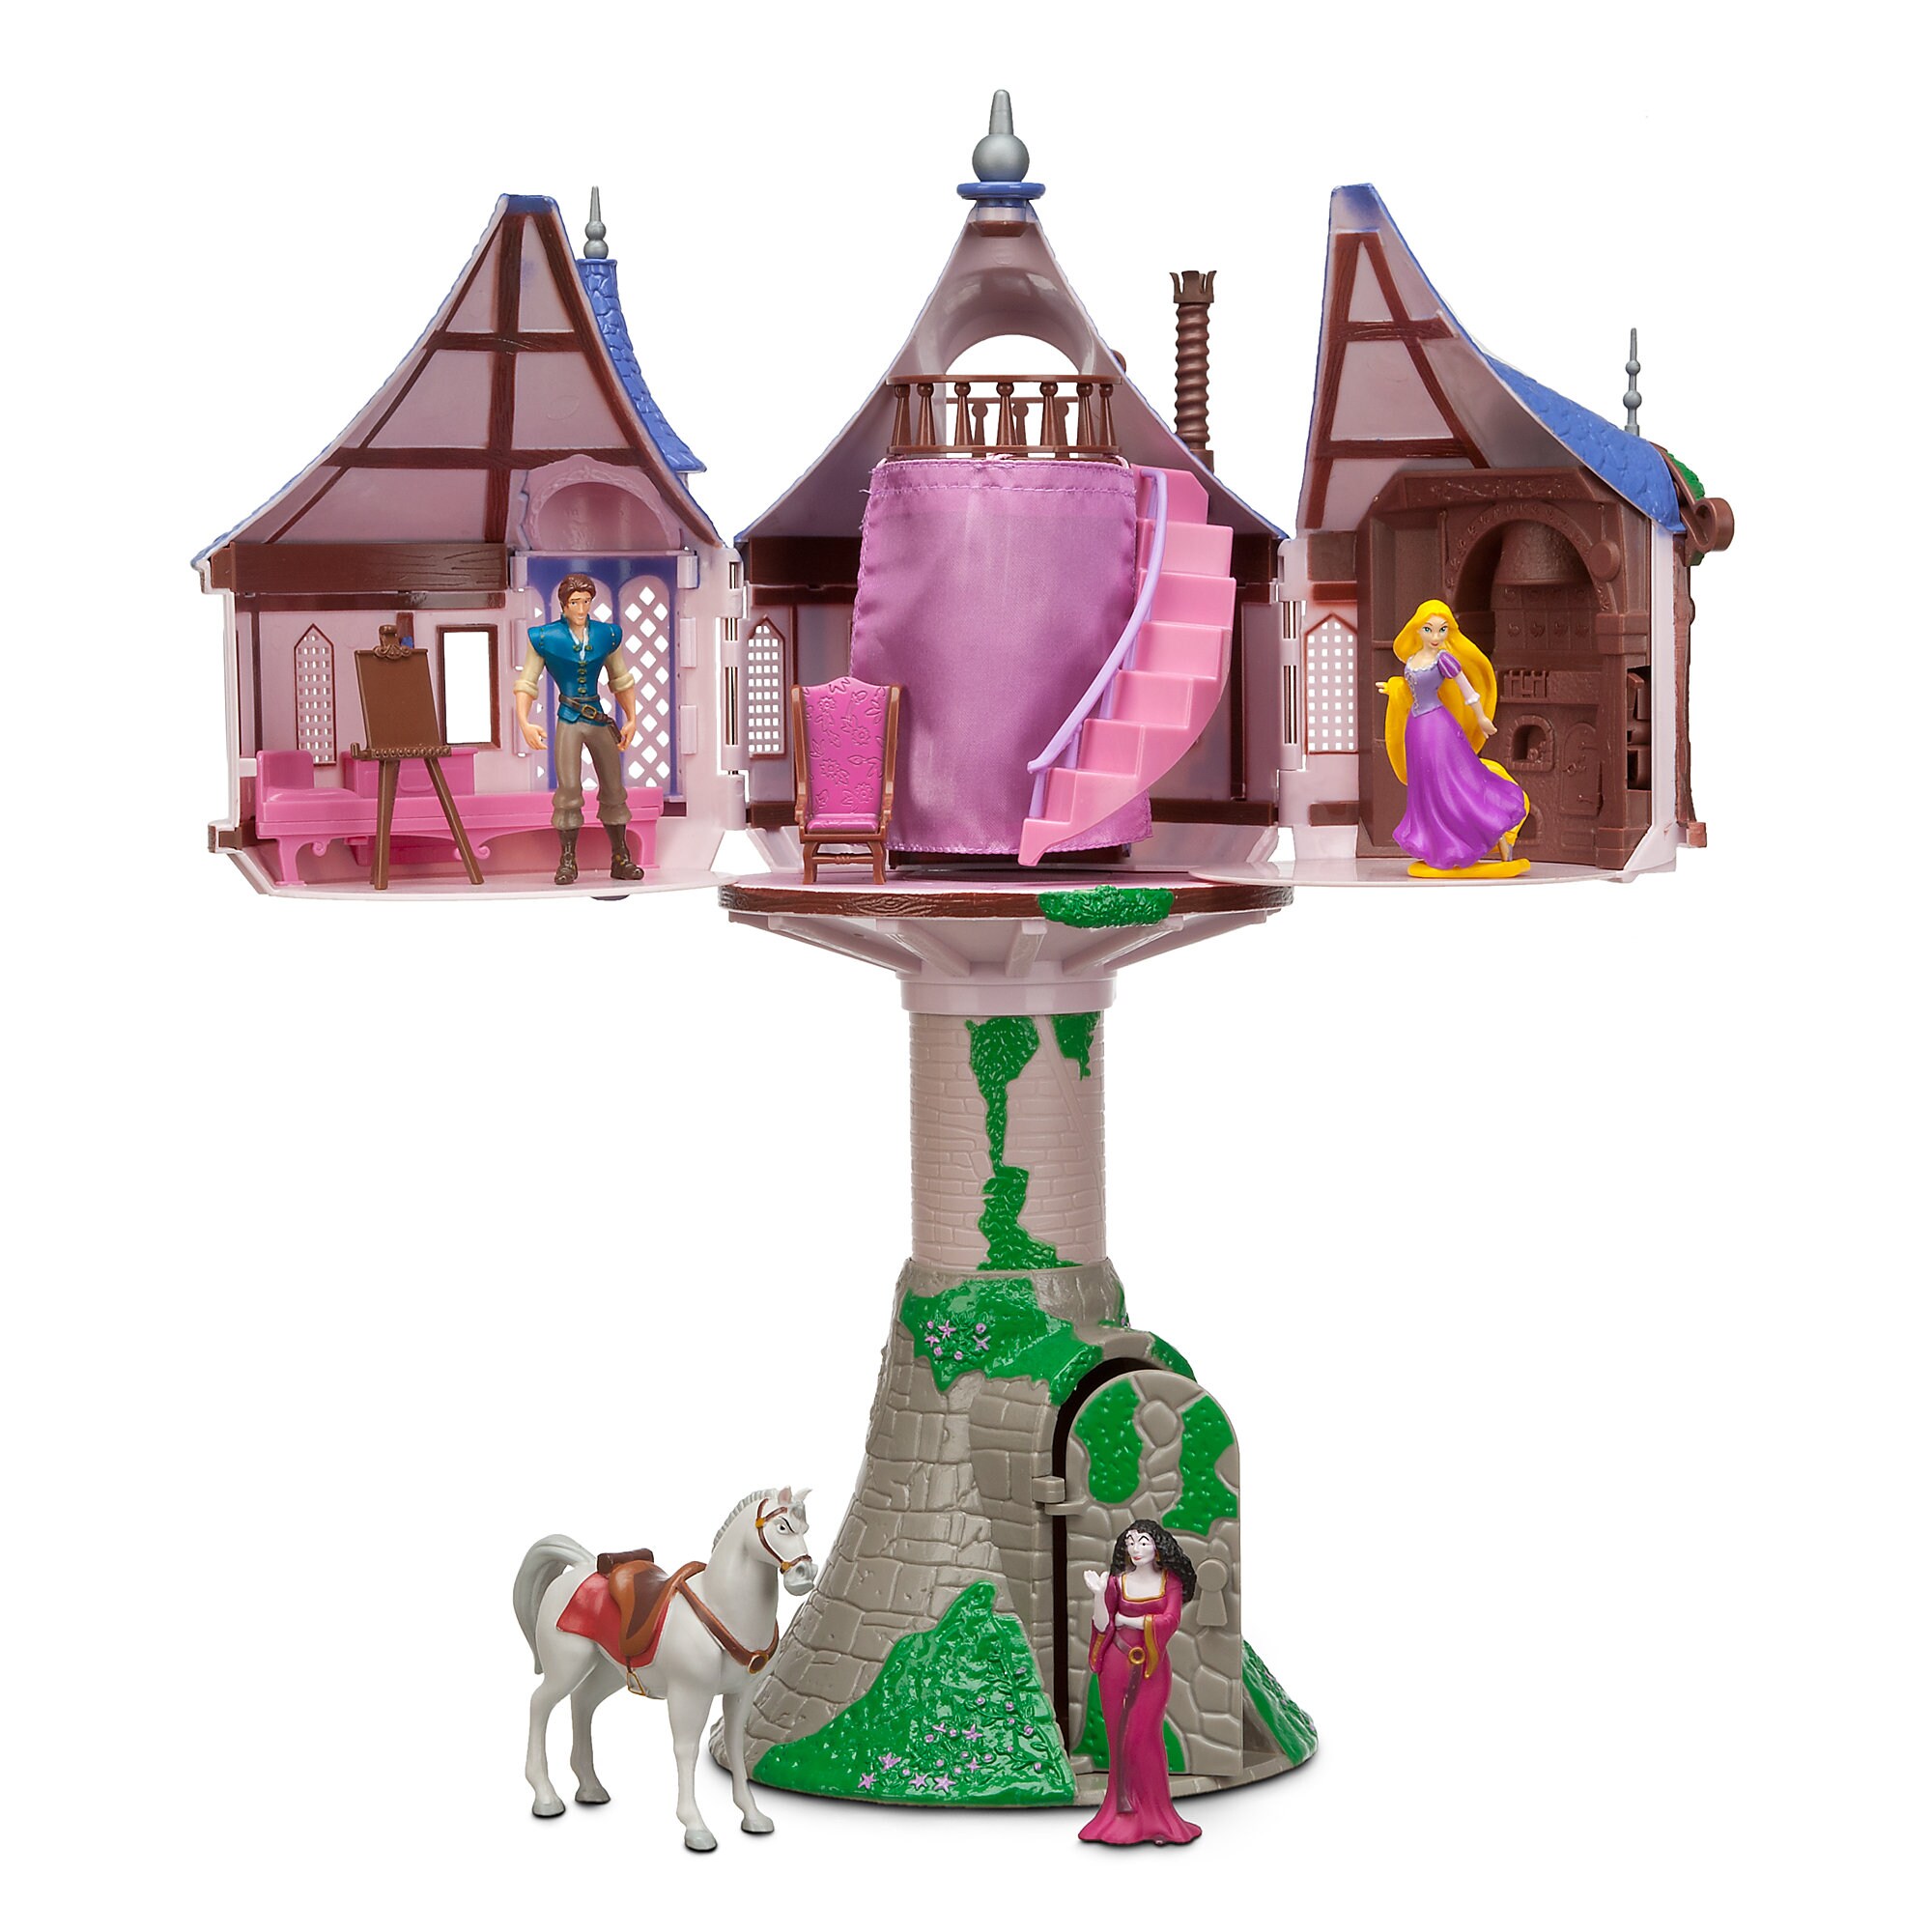 Rapunzel Tower Play Set - Tangled